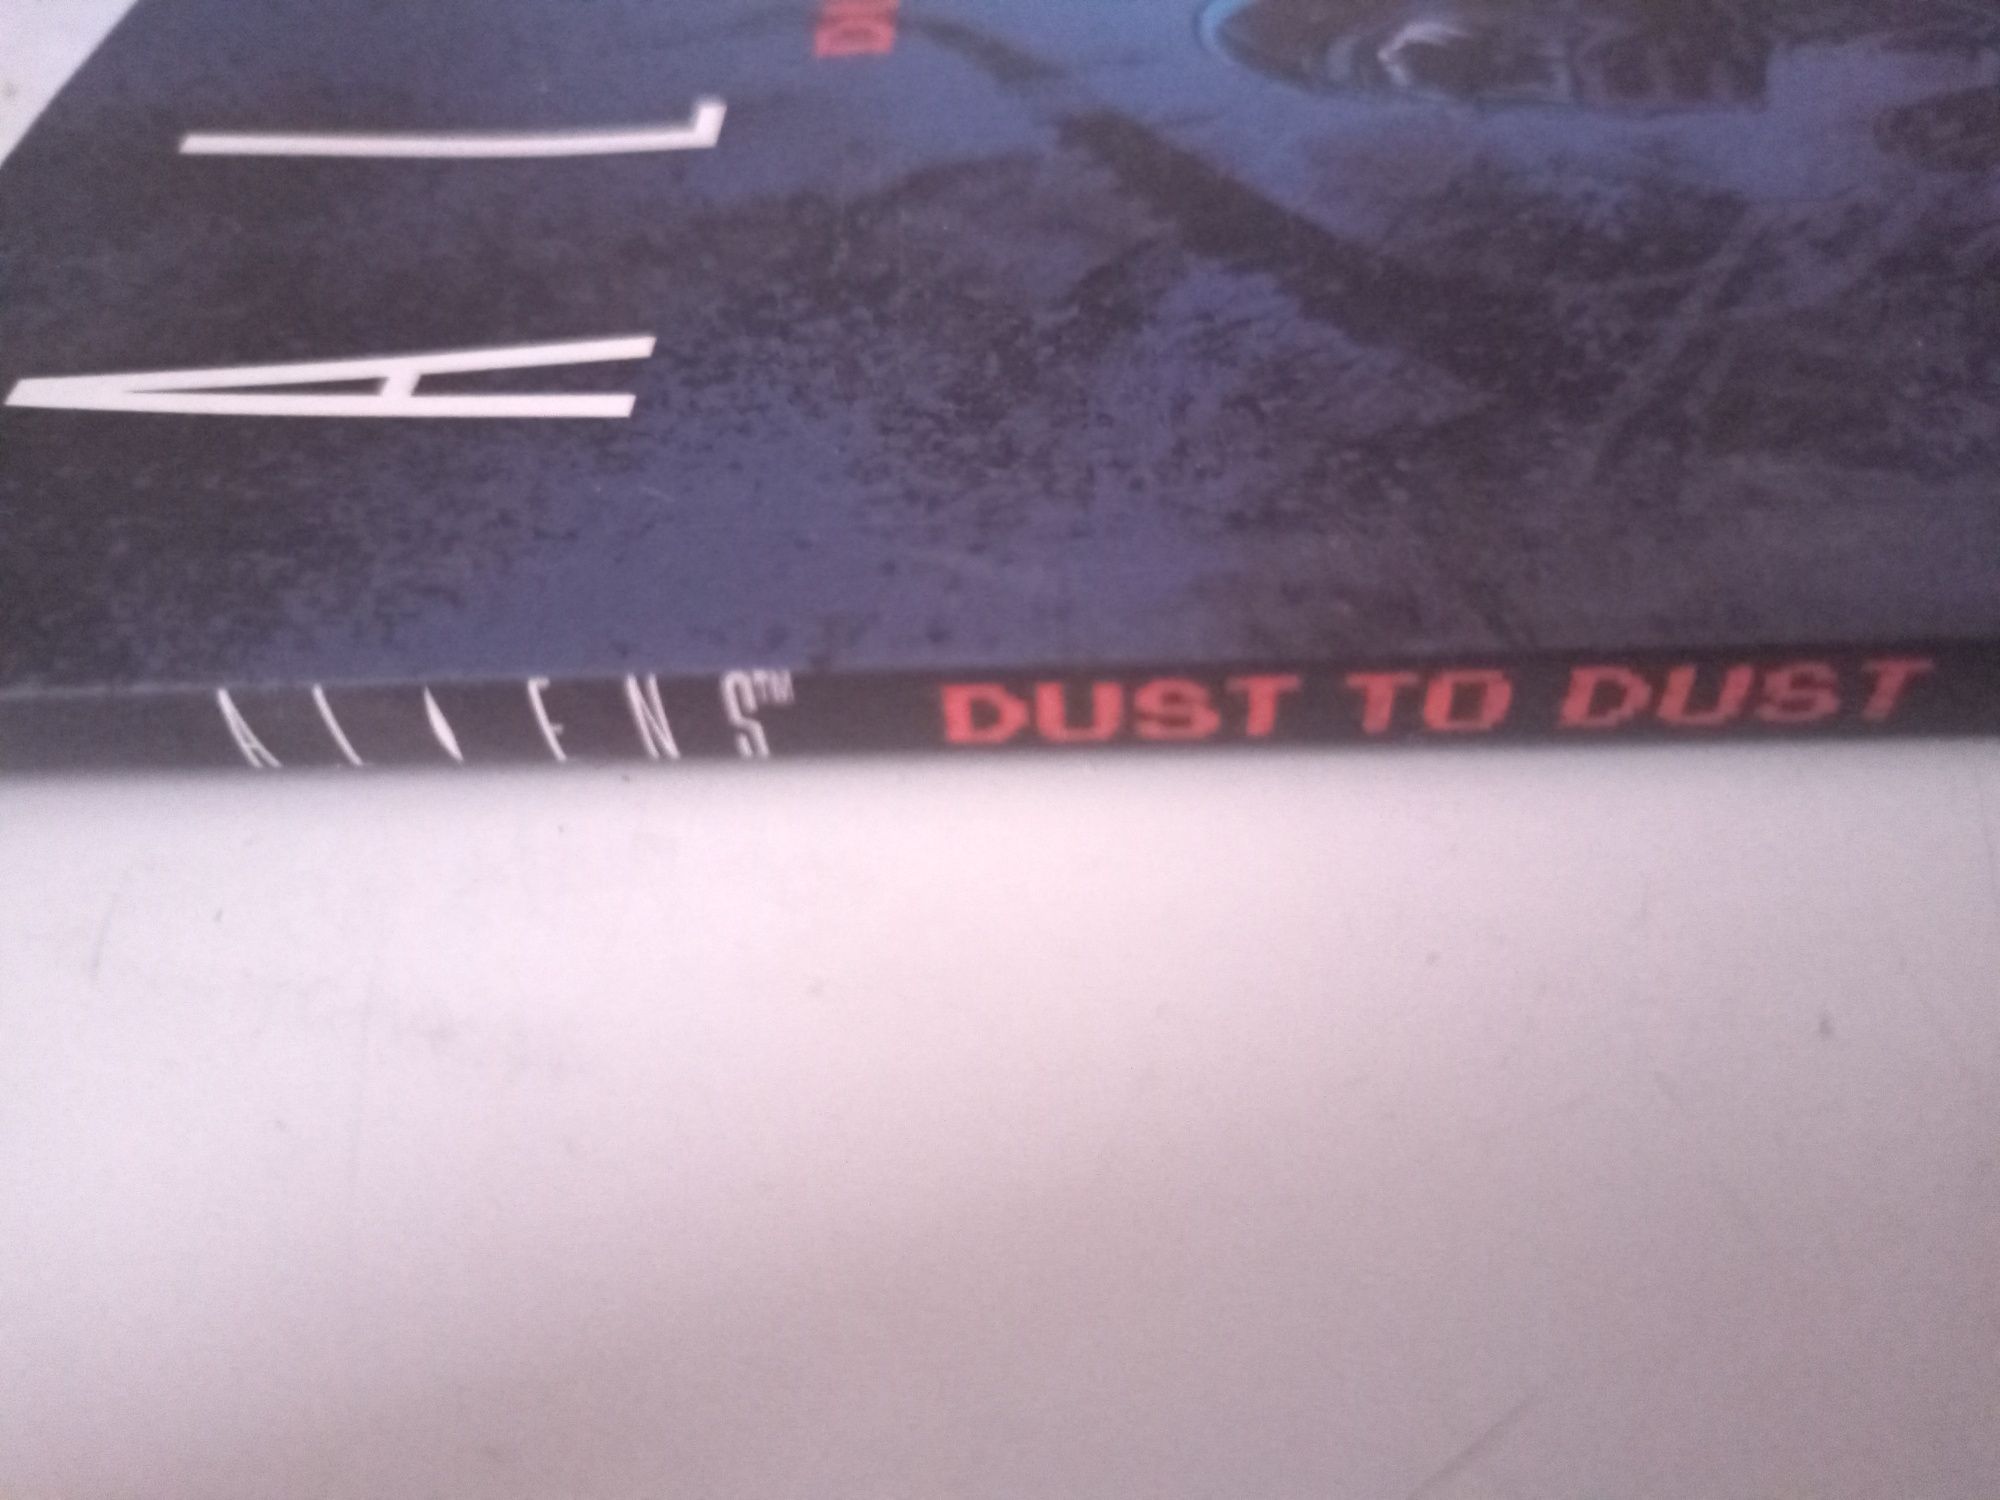 Aliens dust to dust - Hardman comics